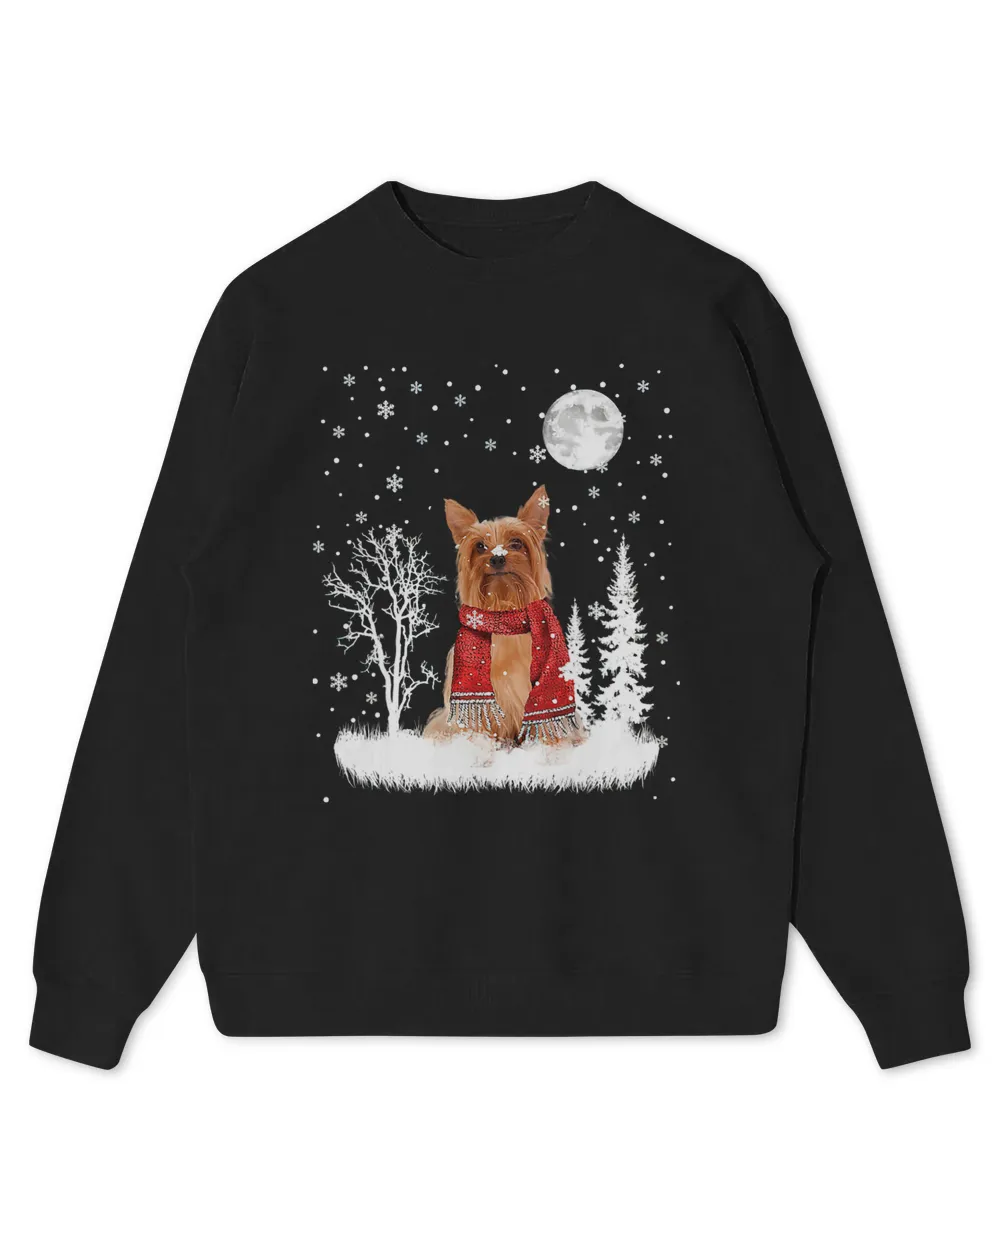 Silky Terrier Under Moonlight Snow Christmas Pajama 309